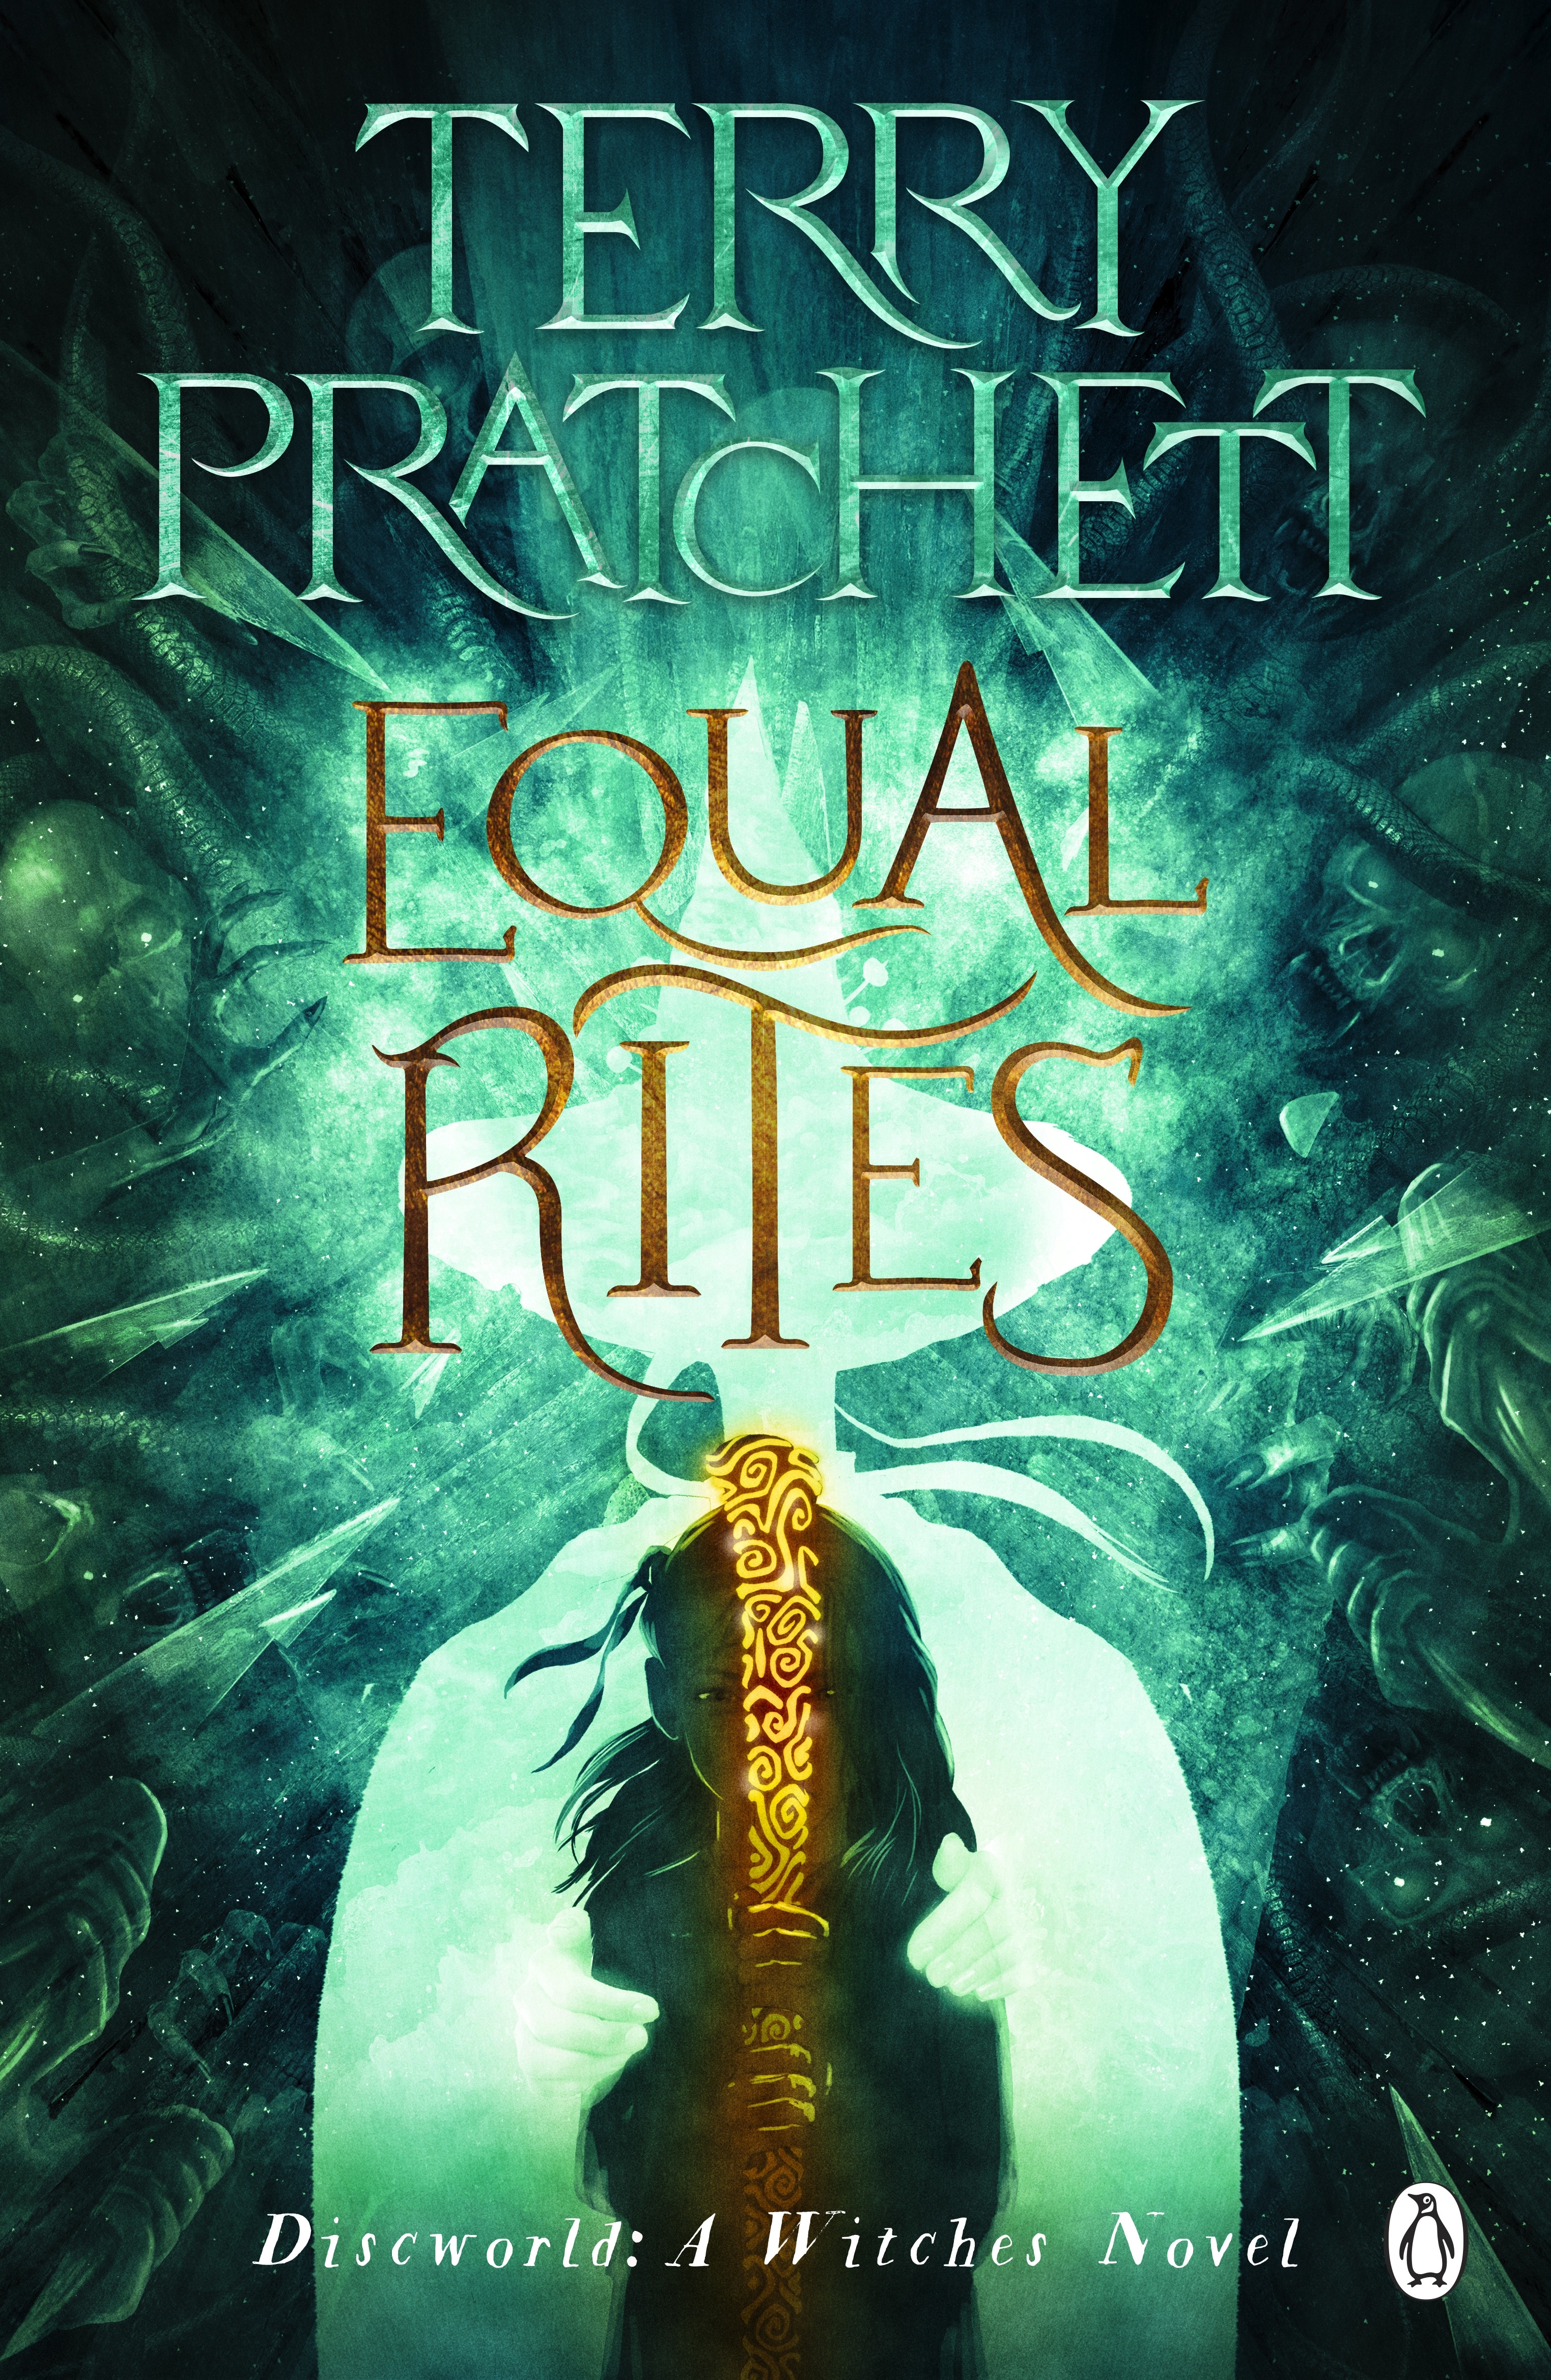 Book “Equal Rites” by Terry Pratchett — April 28, 2022